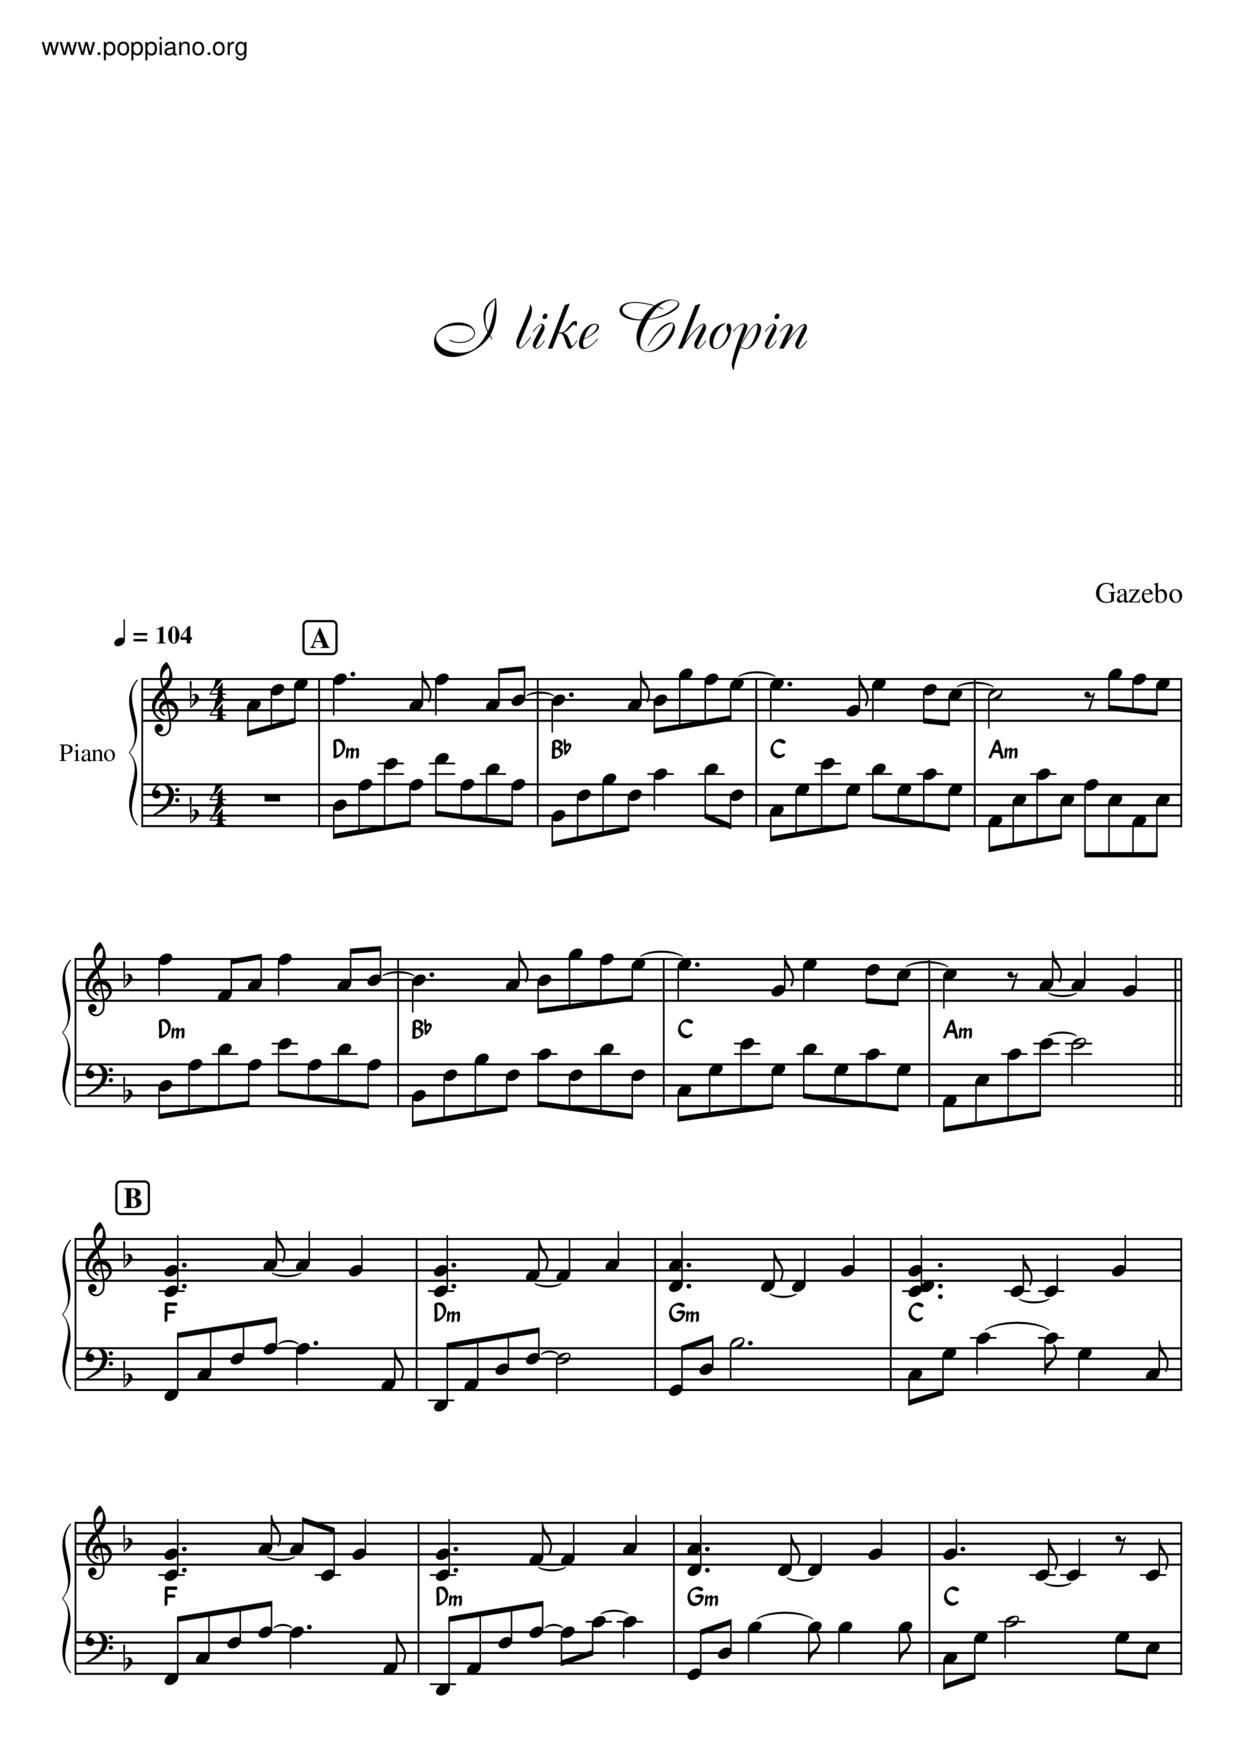 I Like Chopin Score